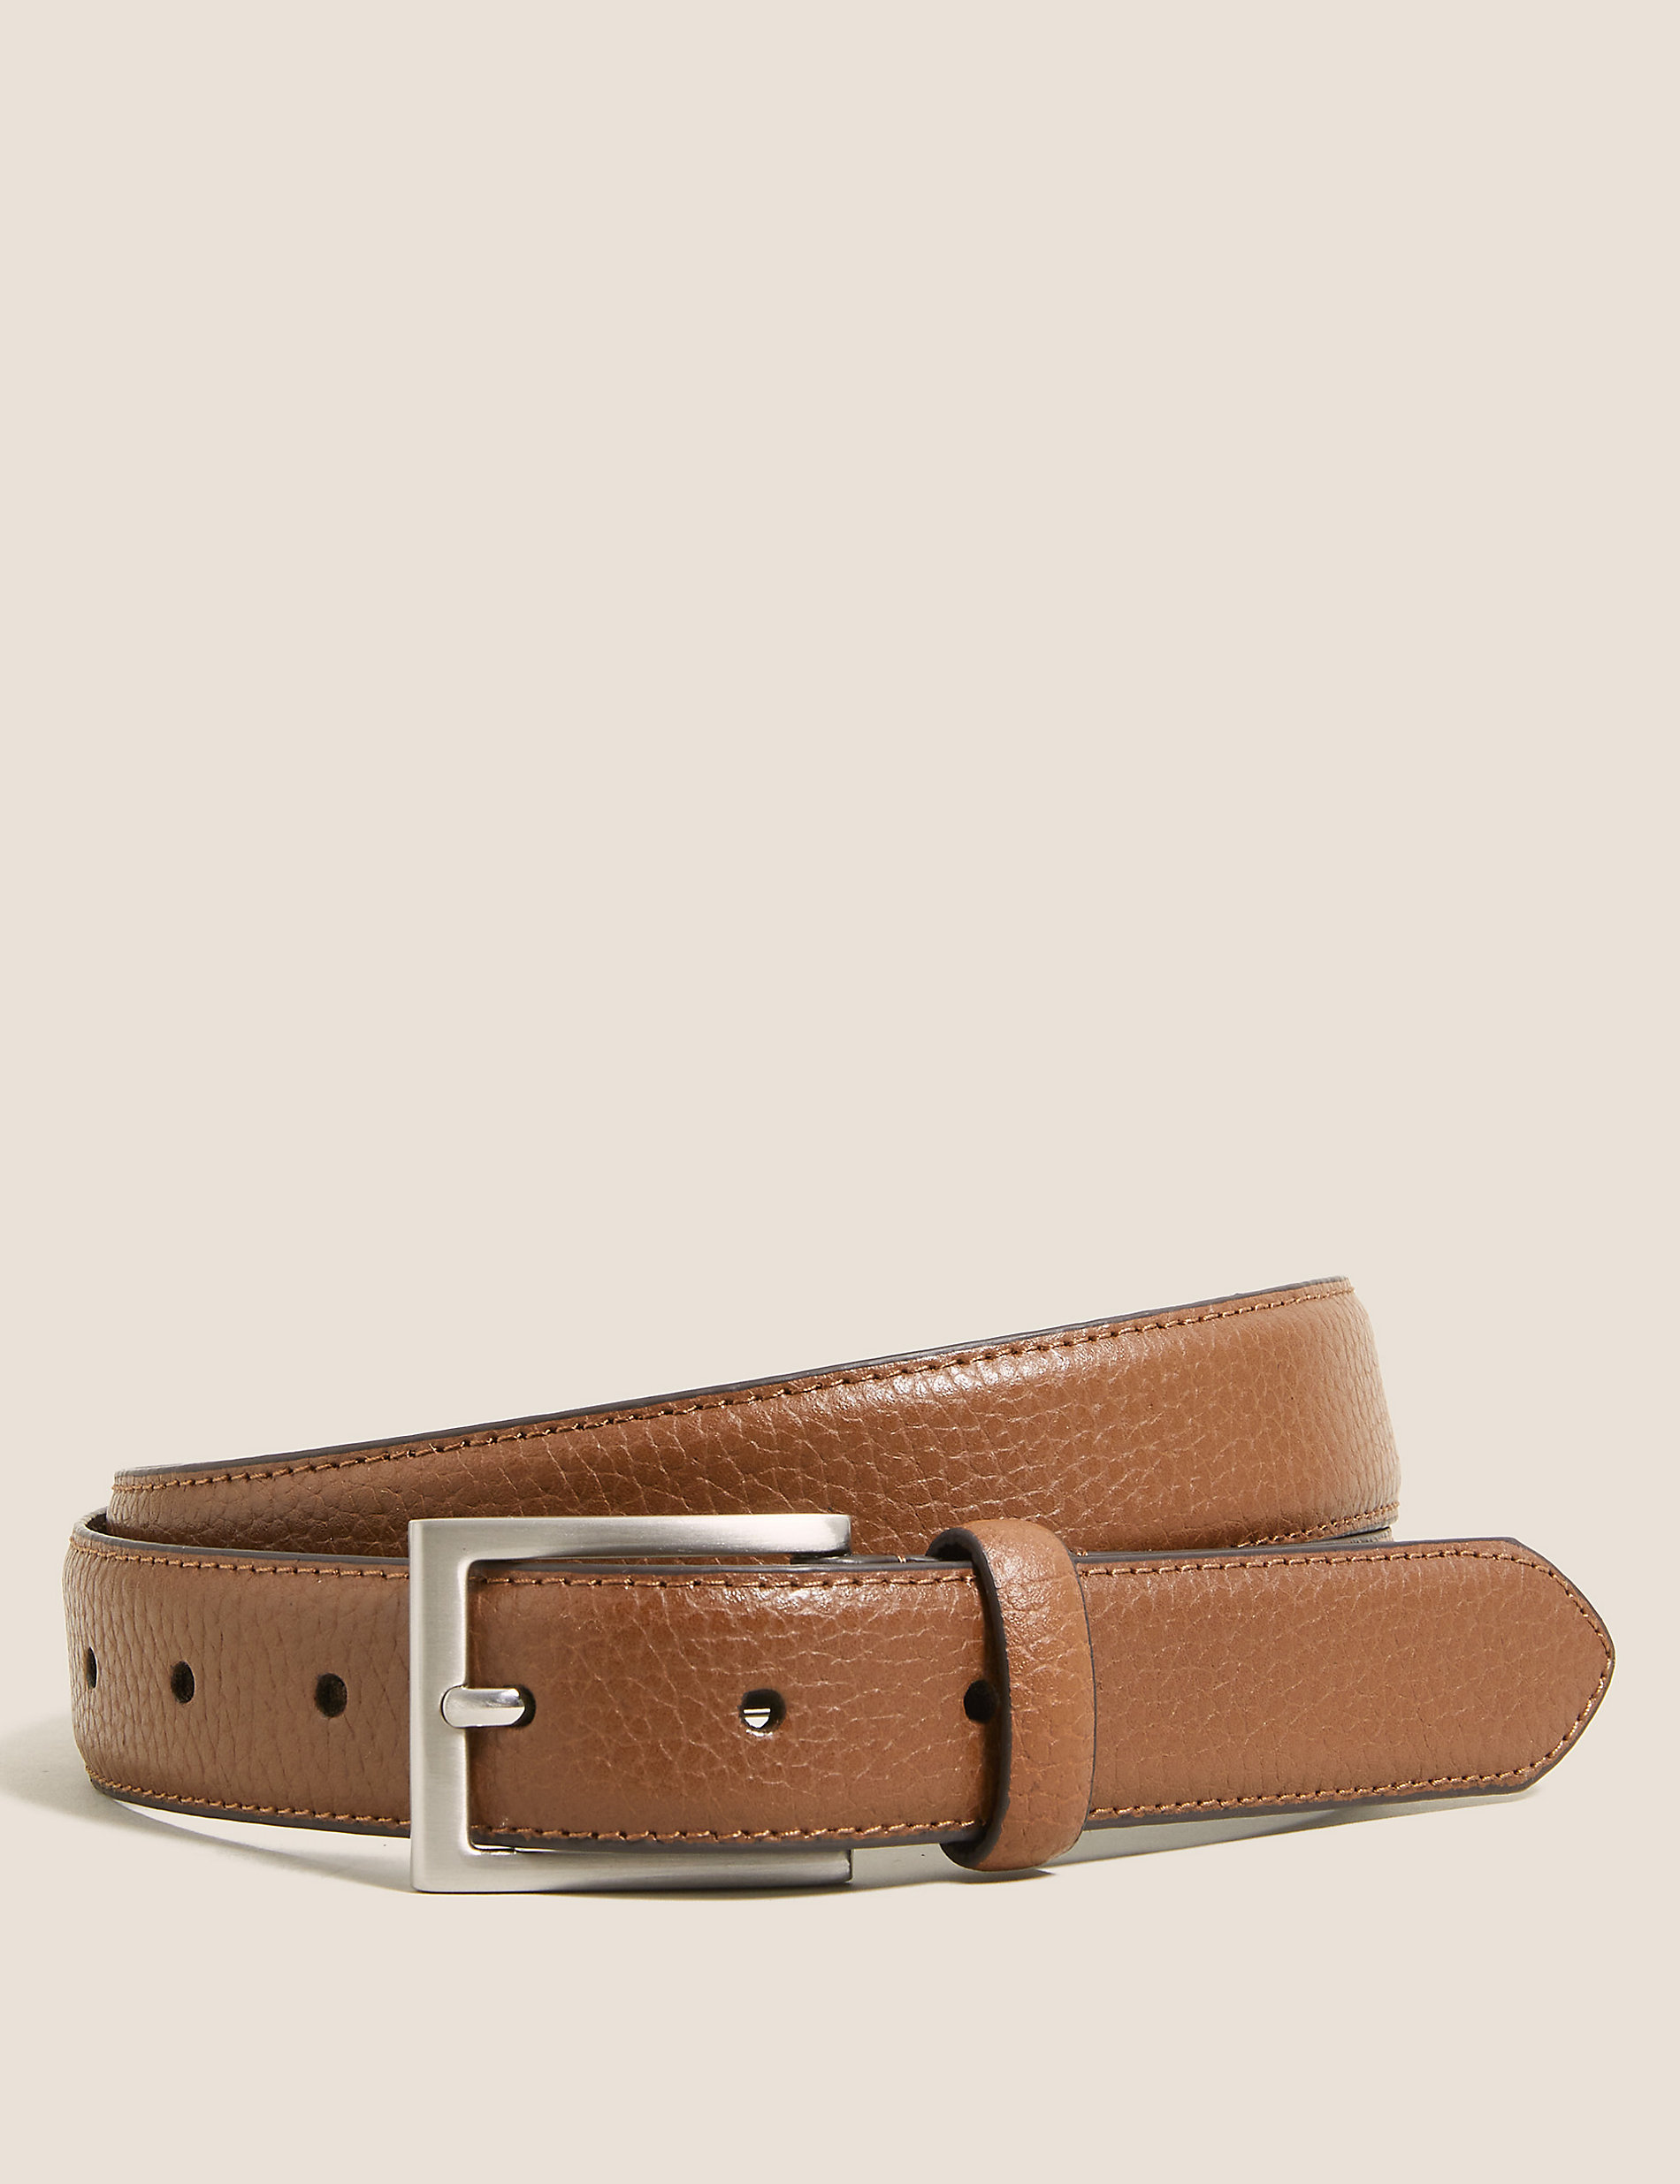 Vintage Brown Leather Slim Western Style Belt Length 112 cm Accessories Belts & Braces Belts 